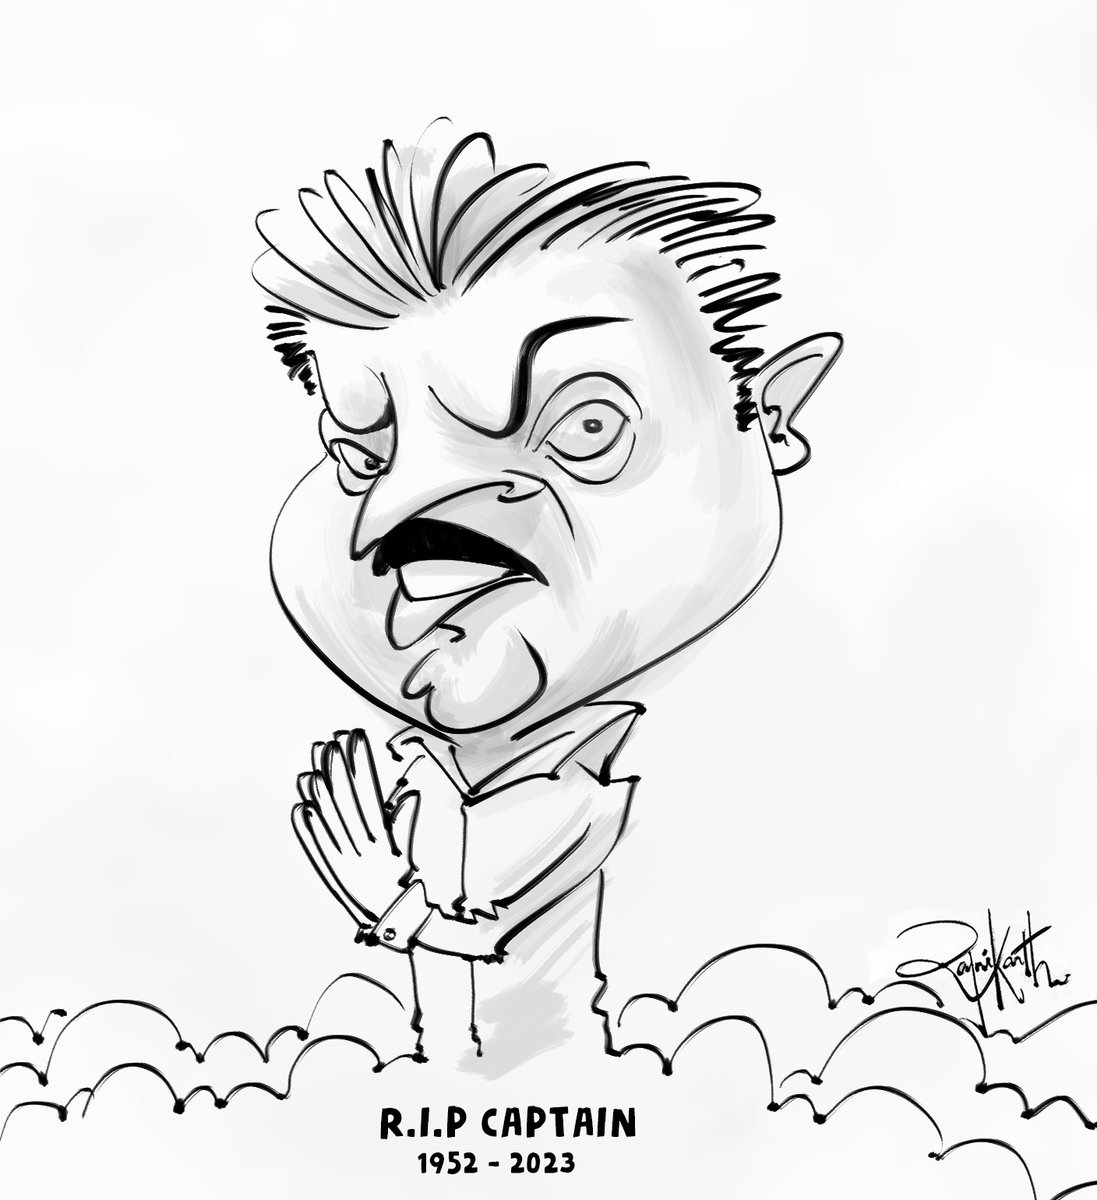 #VijayakanthRIP #Captain #RIPCaptain #DMDK #Editorialcartoons